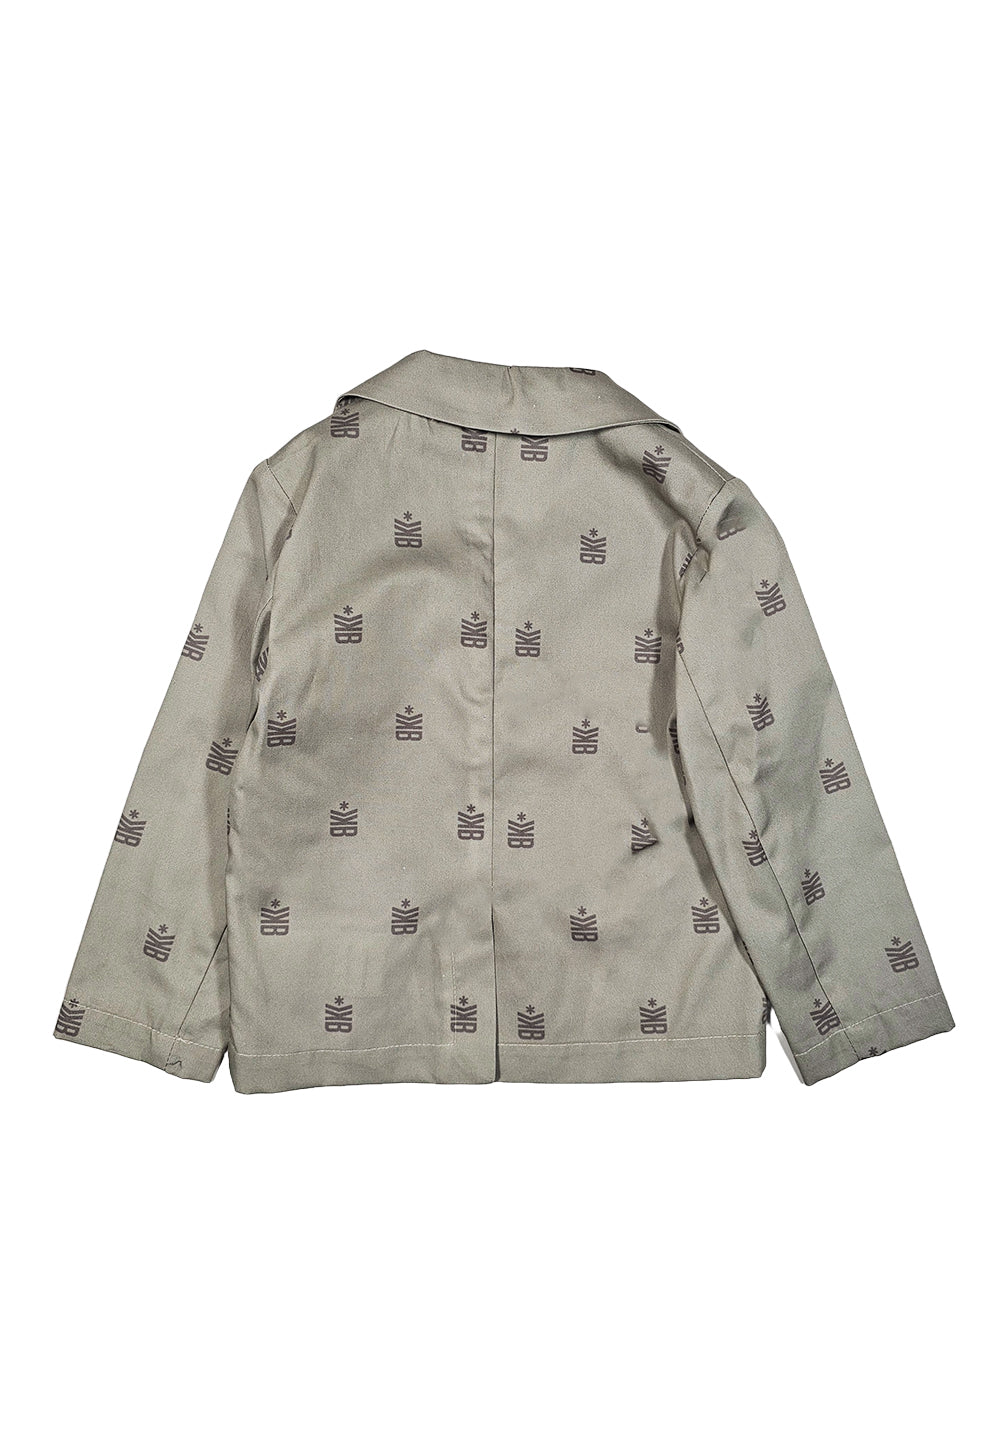 Gray jacket for newborn